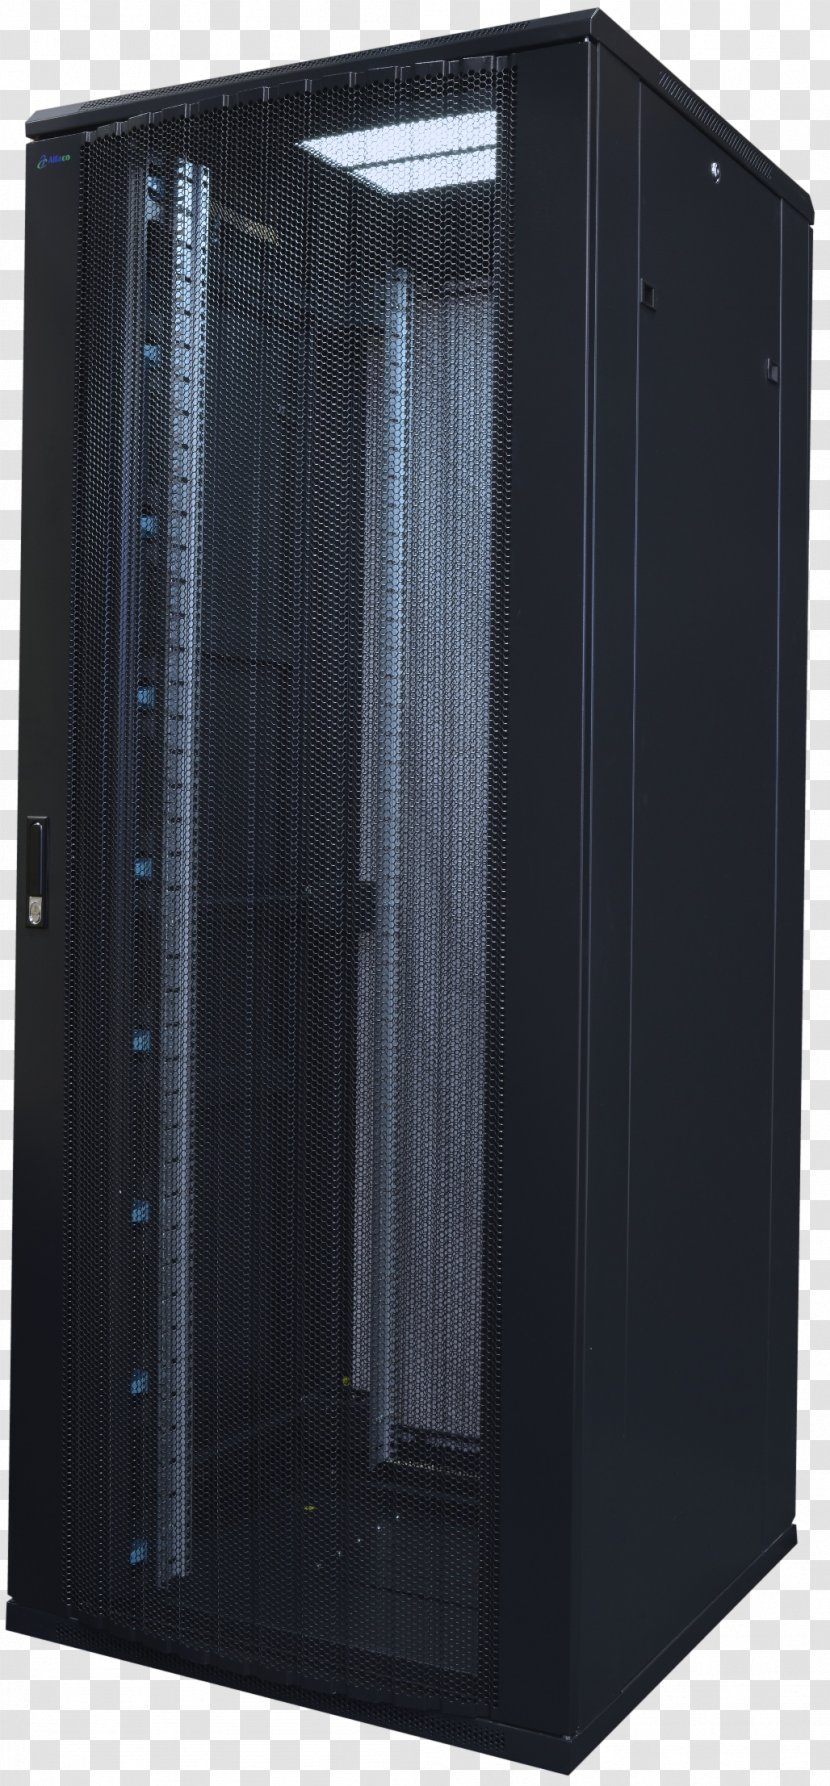 Computer Servers Cases & Housings - Enclosure - 19-inch Rack Transparent PNG